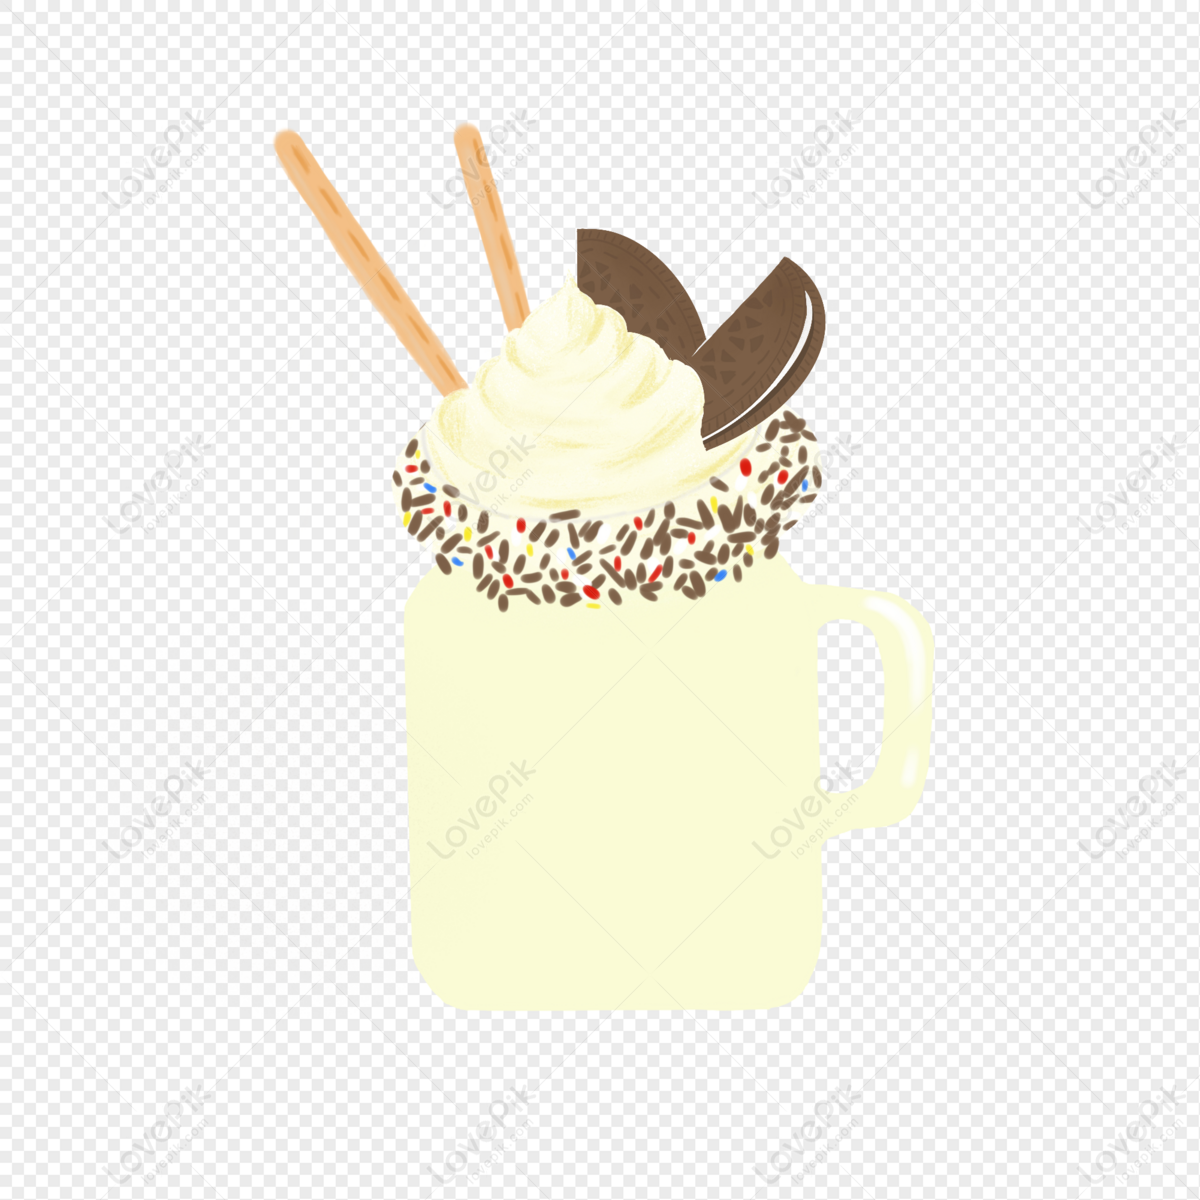 Premium Vector | Hand drawn cup ice cream and lemon illustration